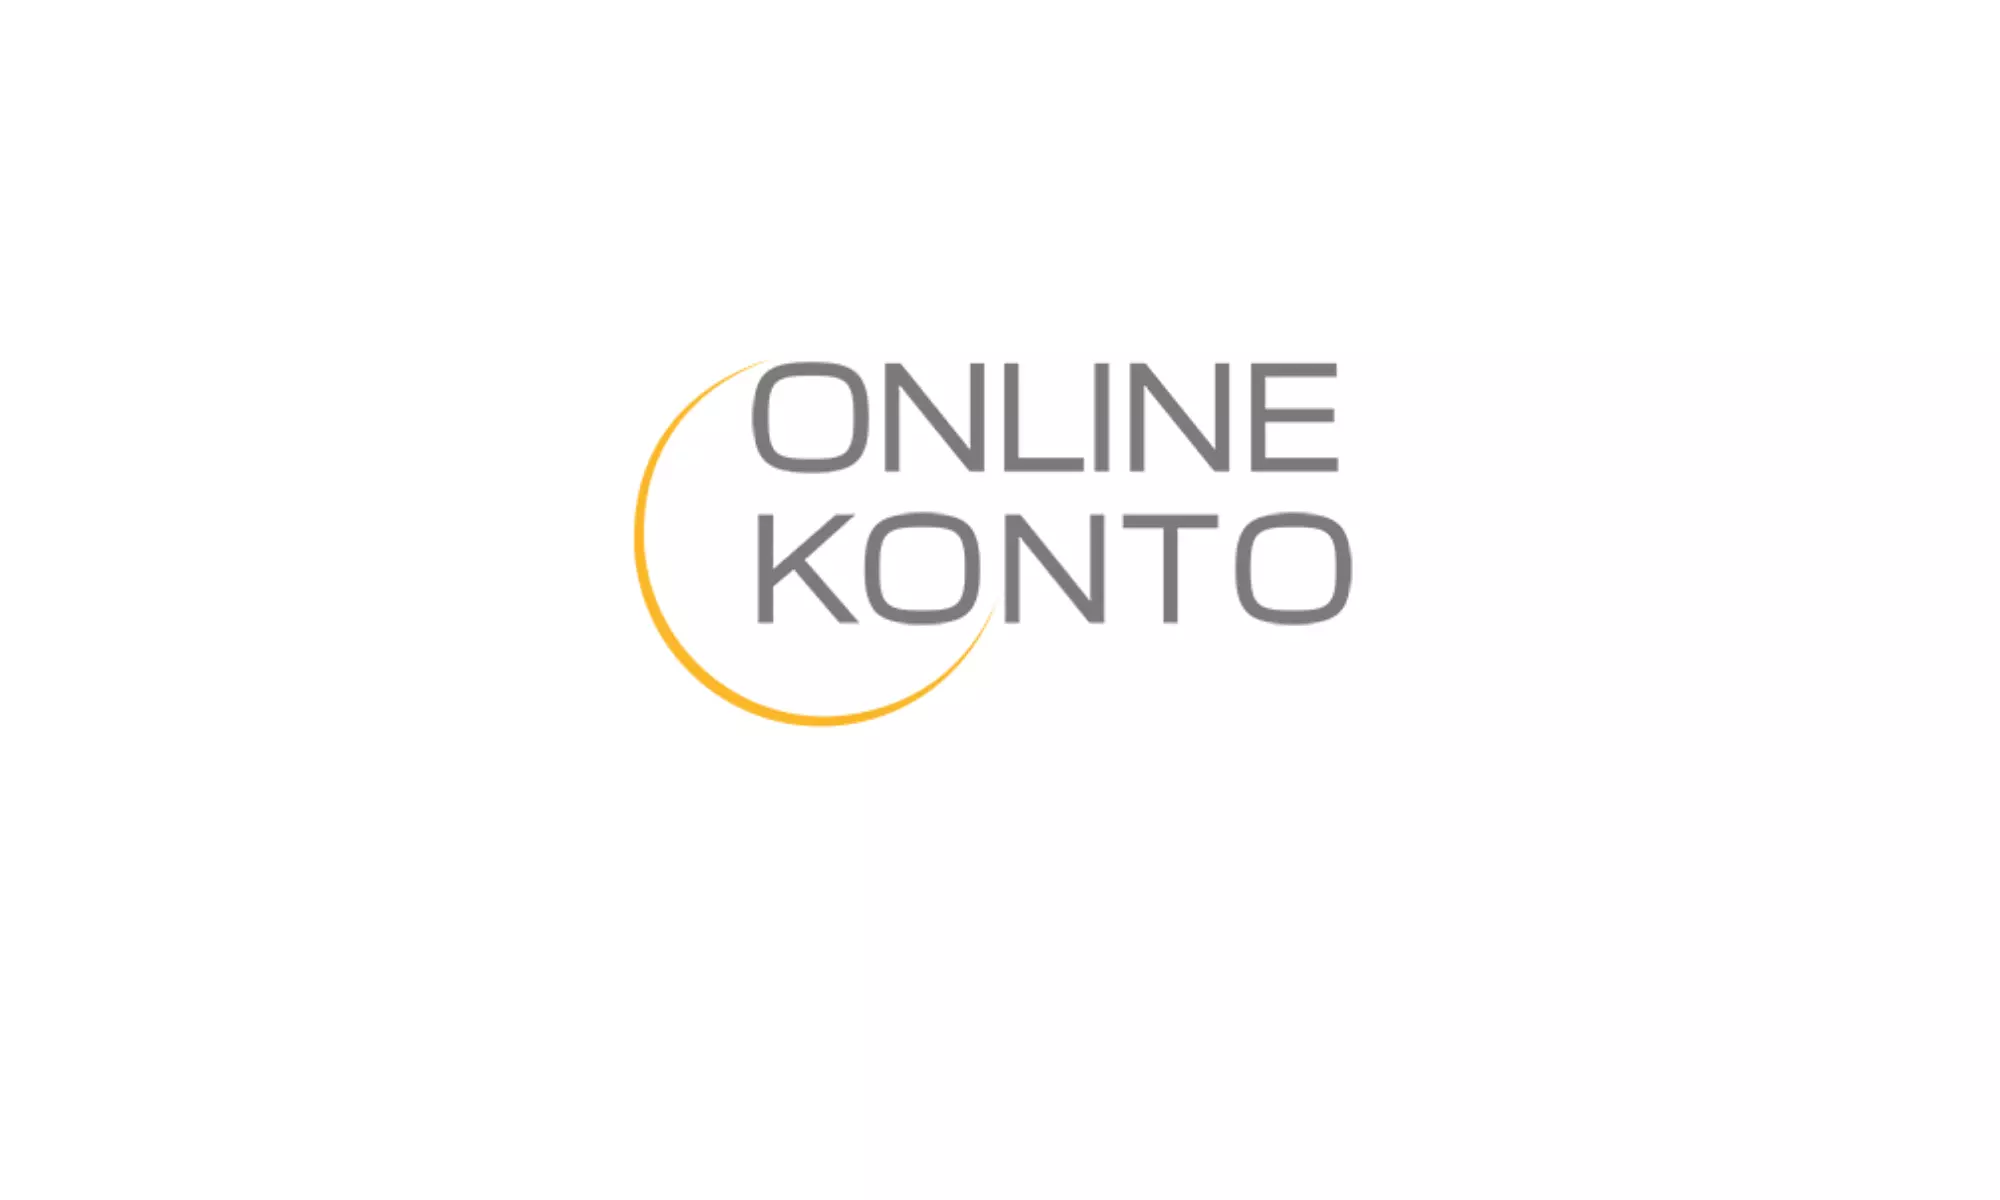 Onlinekonto.de Geschäftskonto – schufafreies Konto für jede Zielgruppe